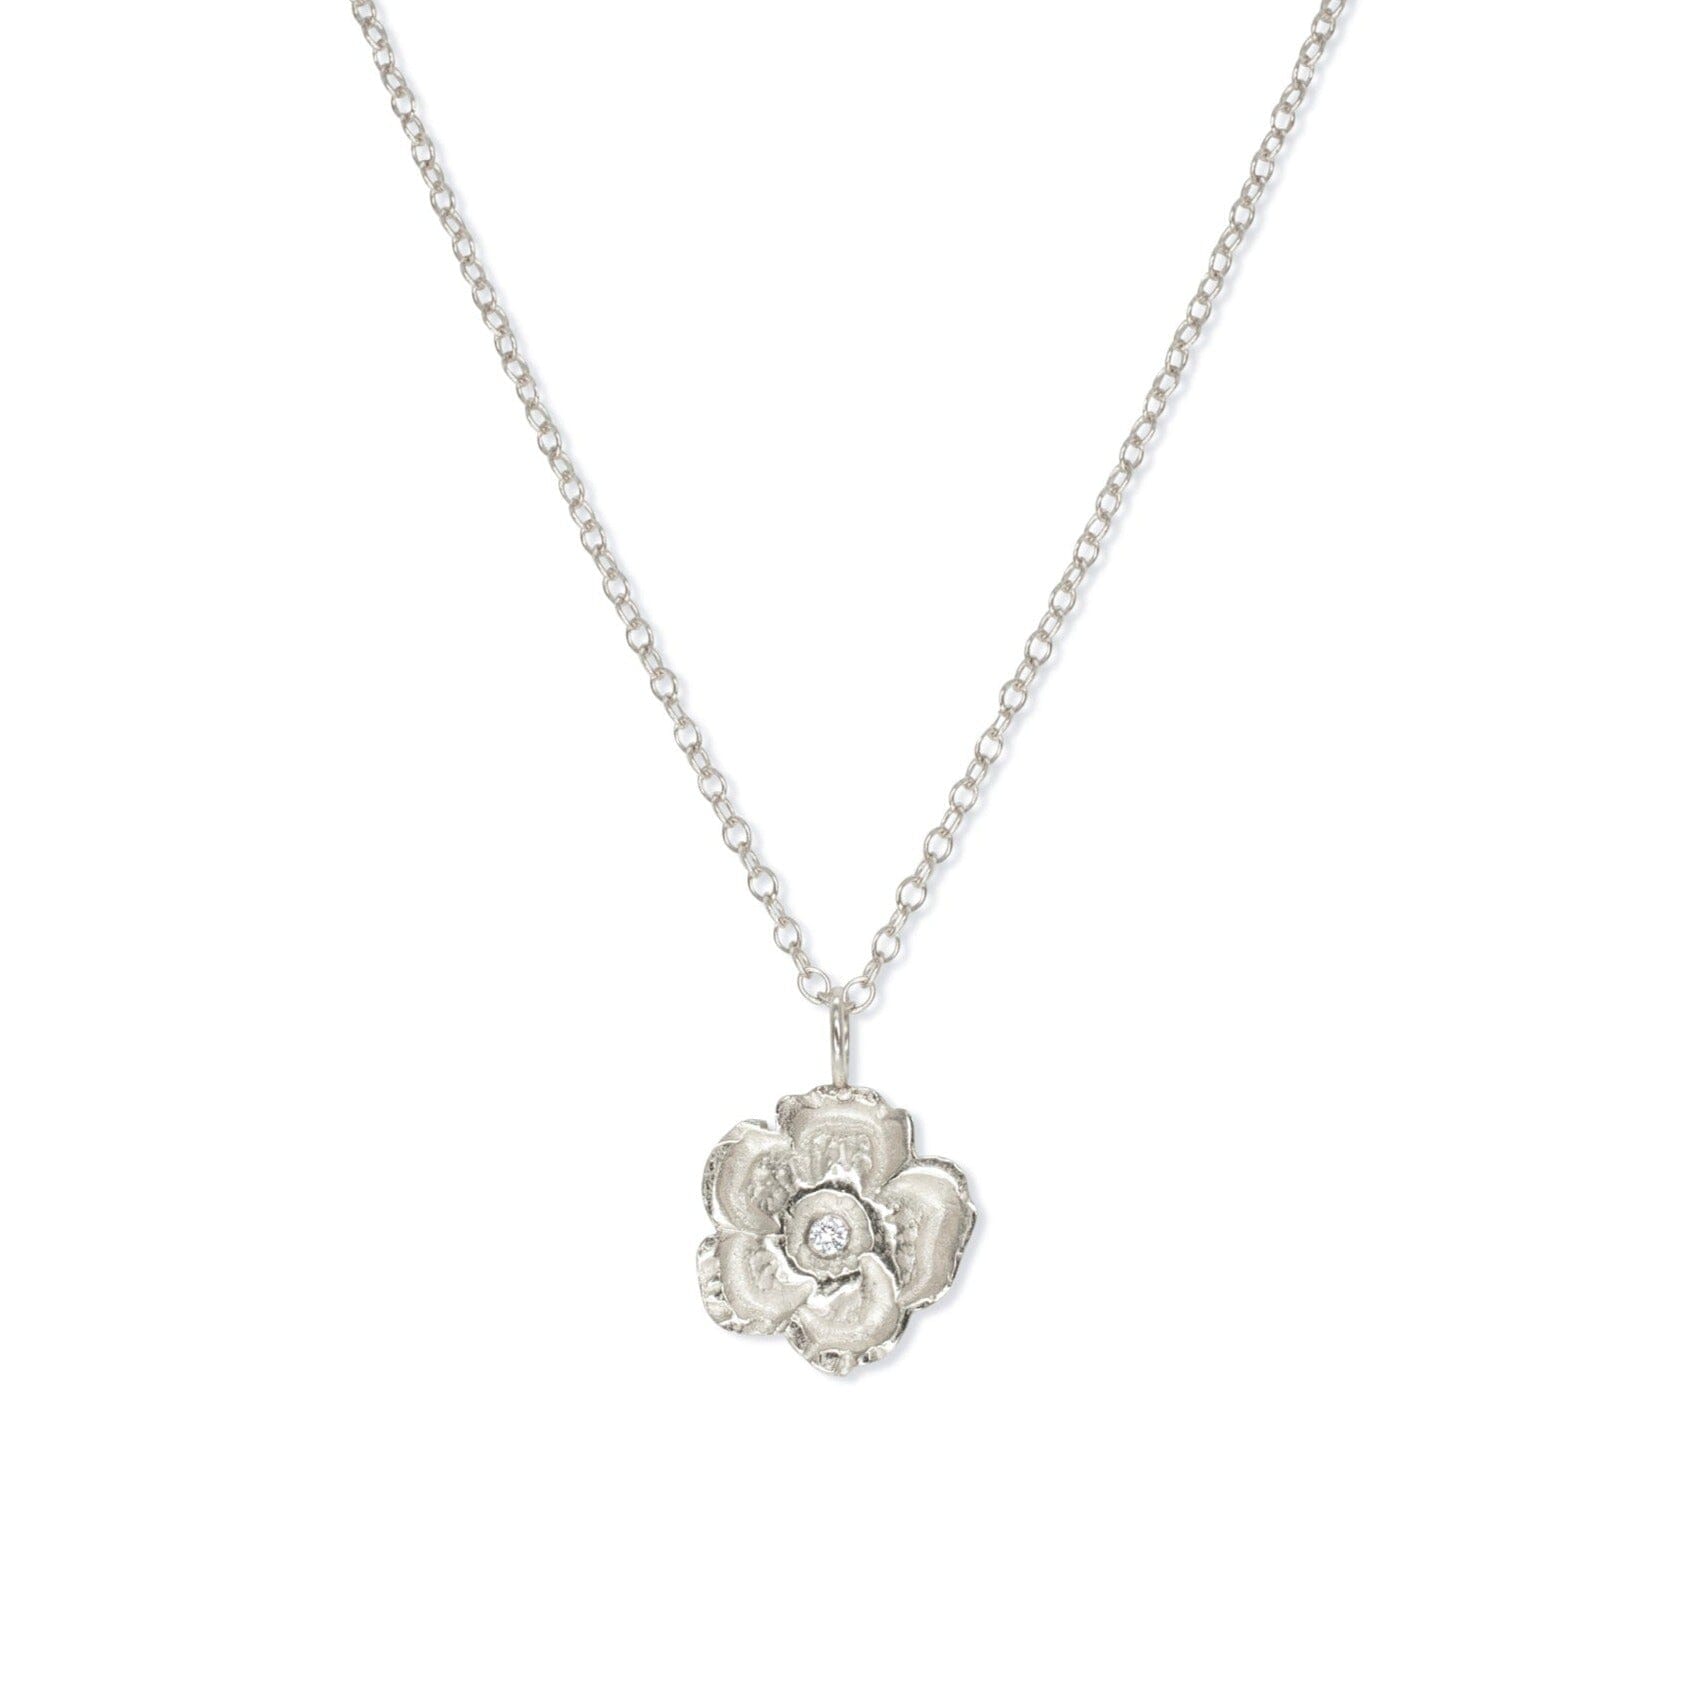 Antique & Vintage Jewelry Chanel Mirror Plaque Necklace - Necklaces - Broken English Jewelry